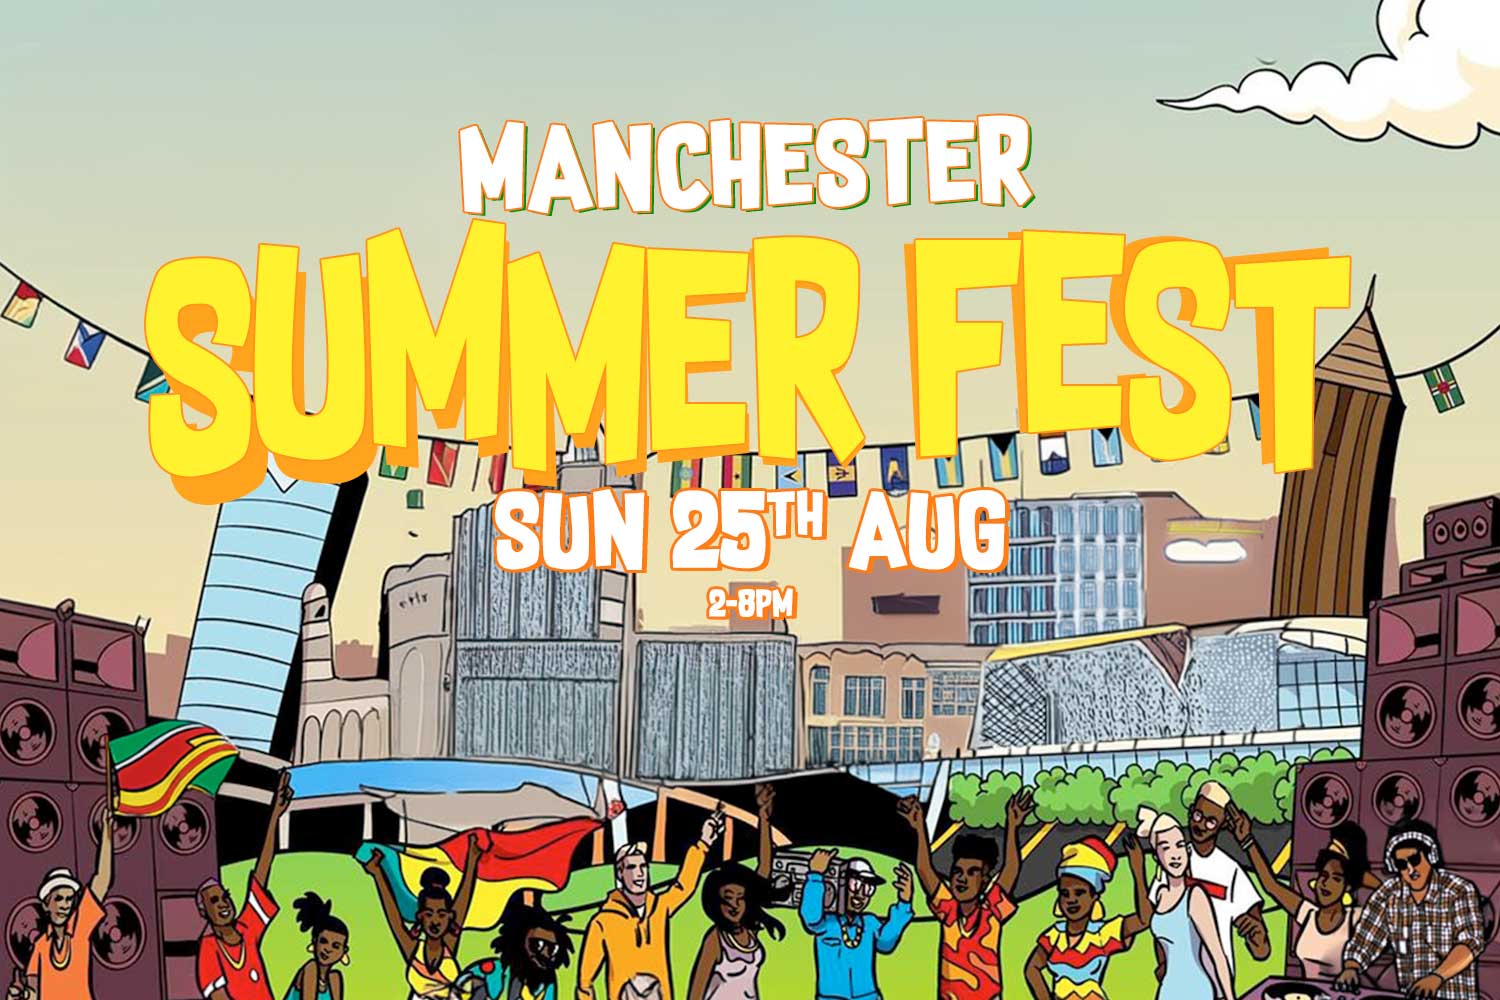 Sun, 25th Aug | Summer Fest MCR